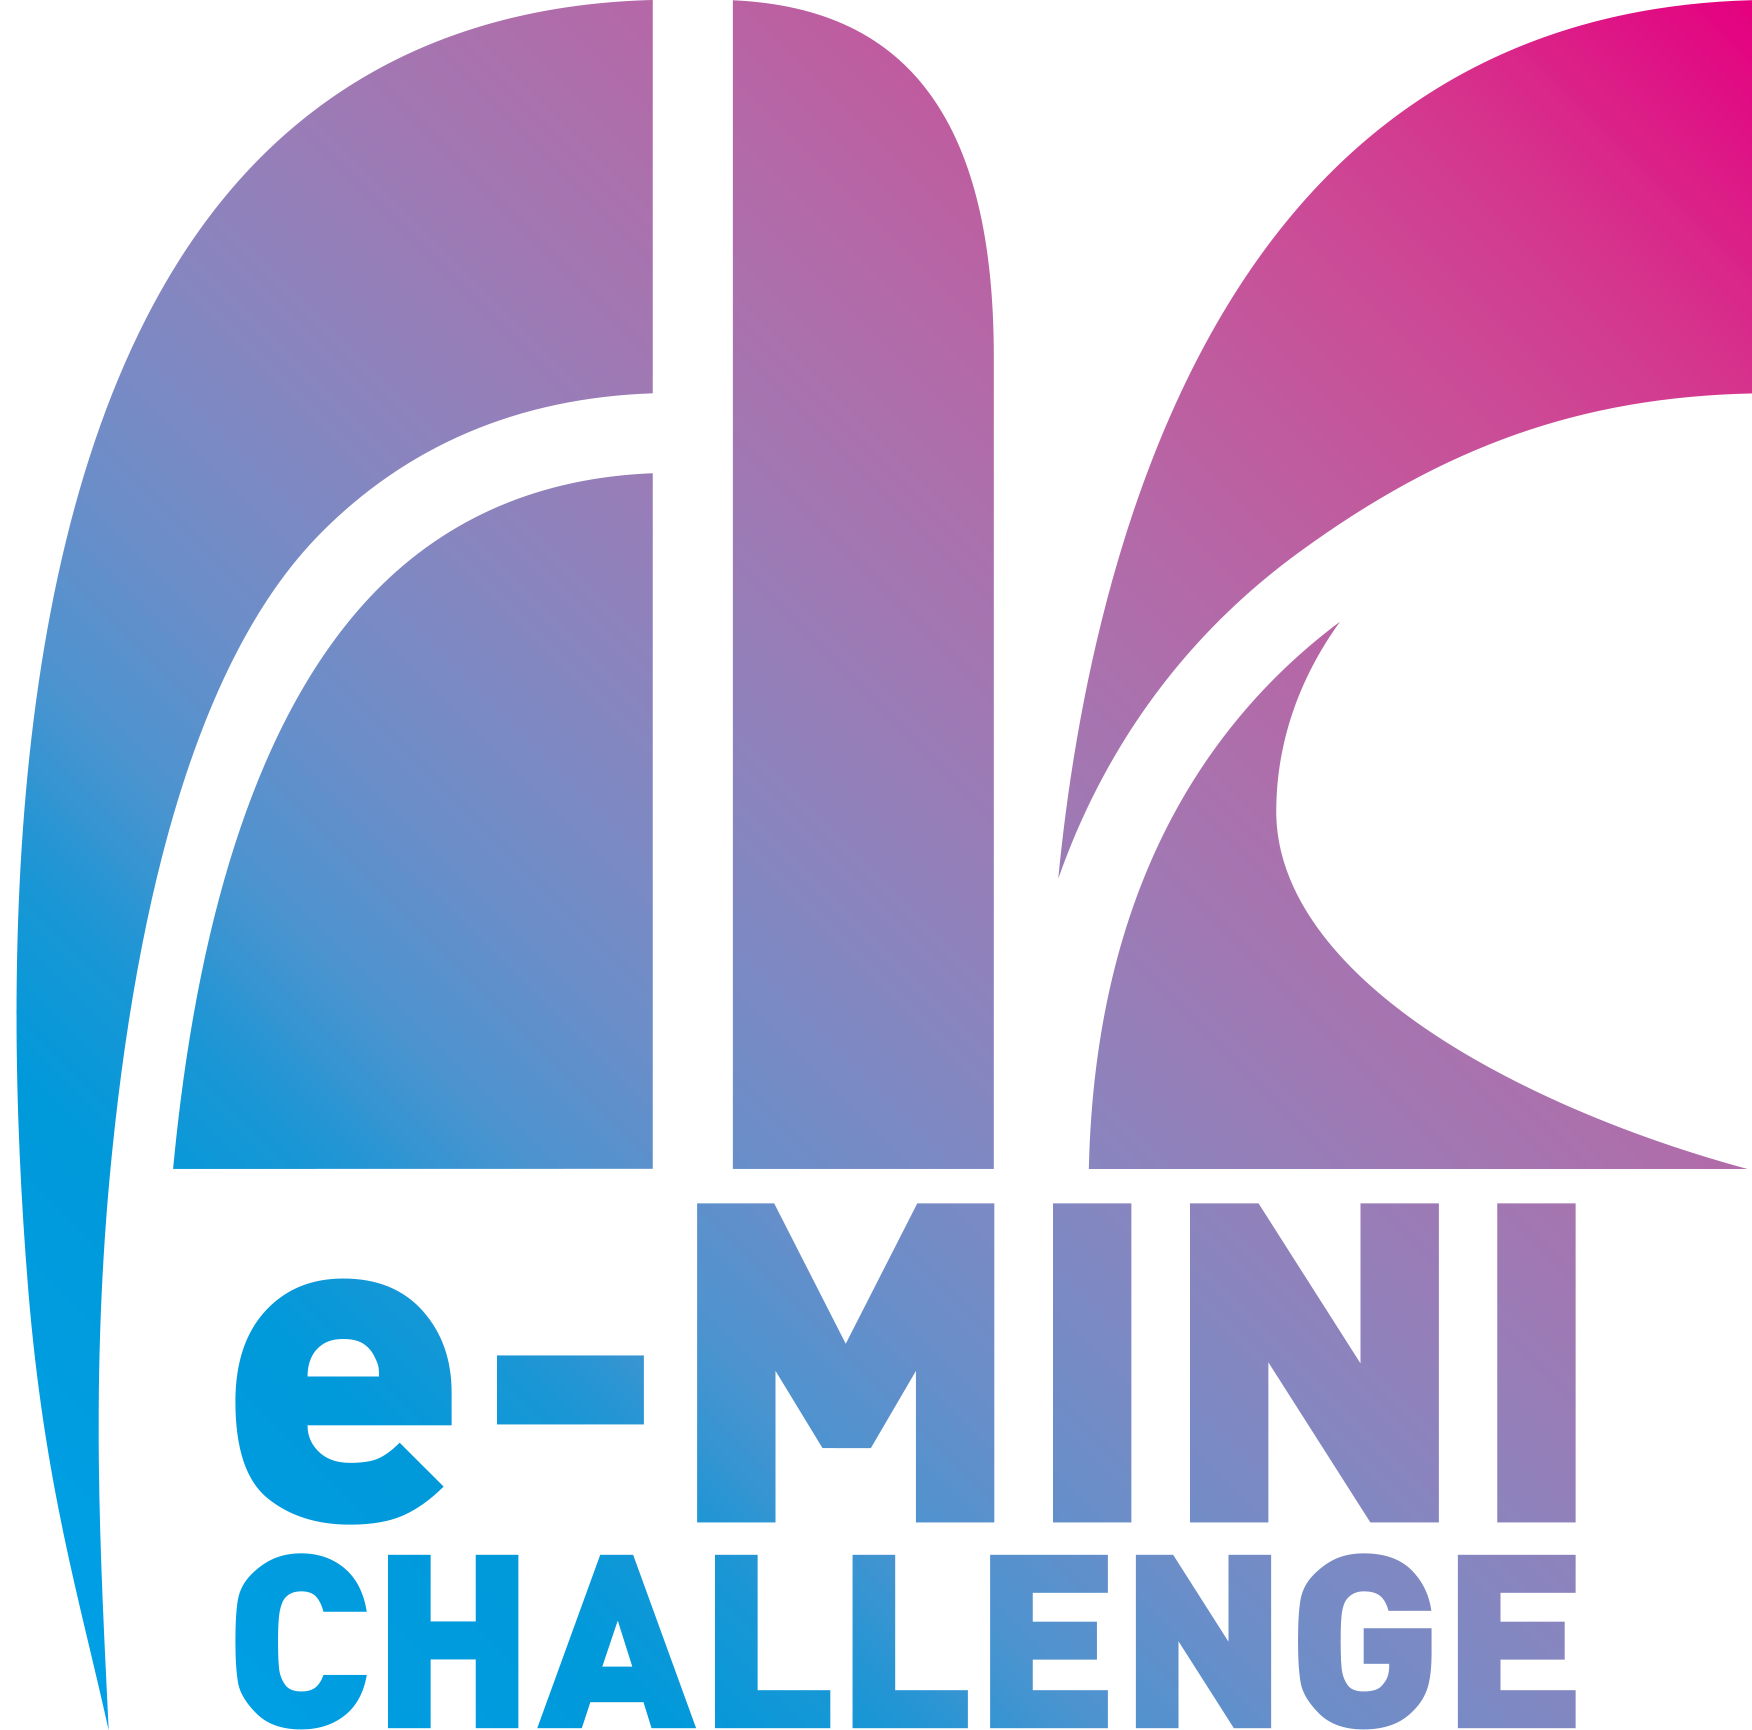 e-MINI CHALLENGE® 2020 CHAMPIONS CUP詳細公開